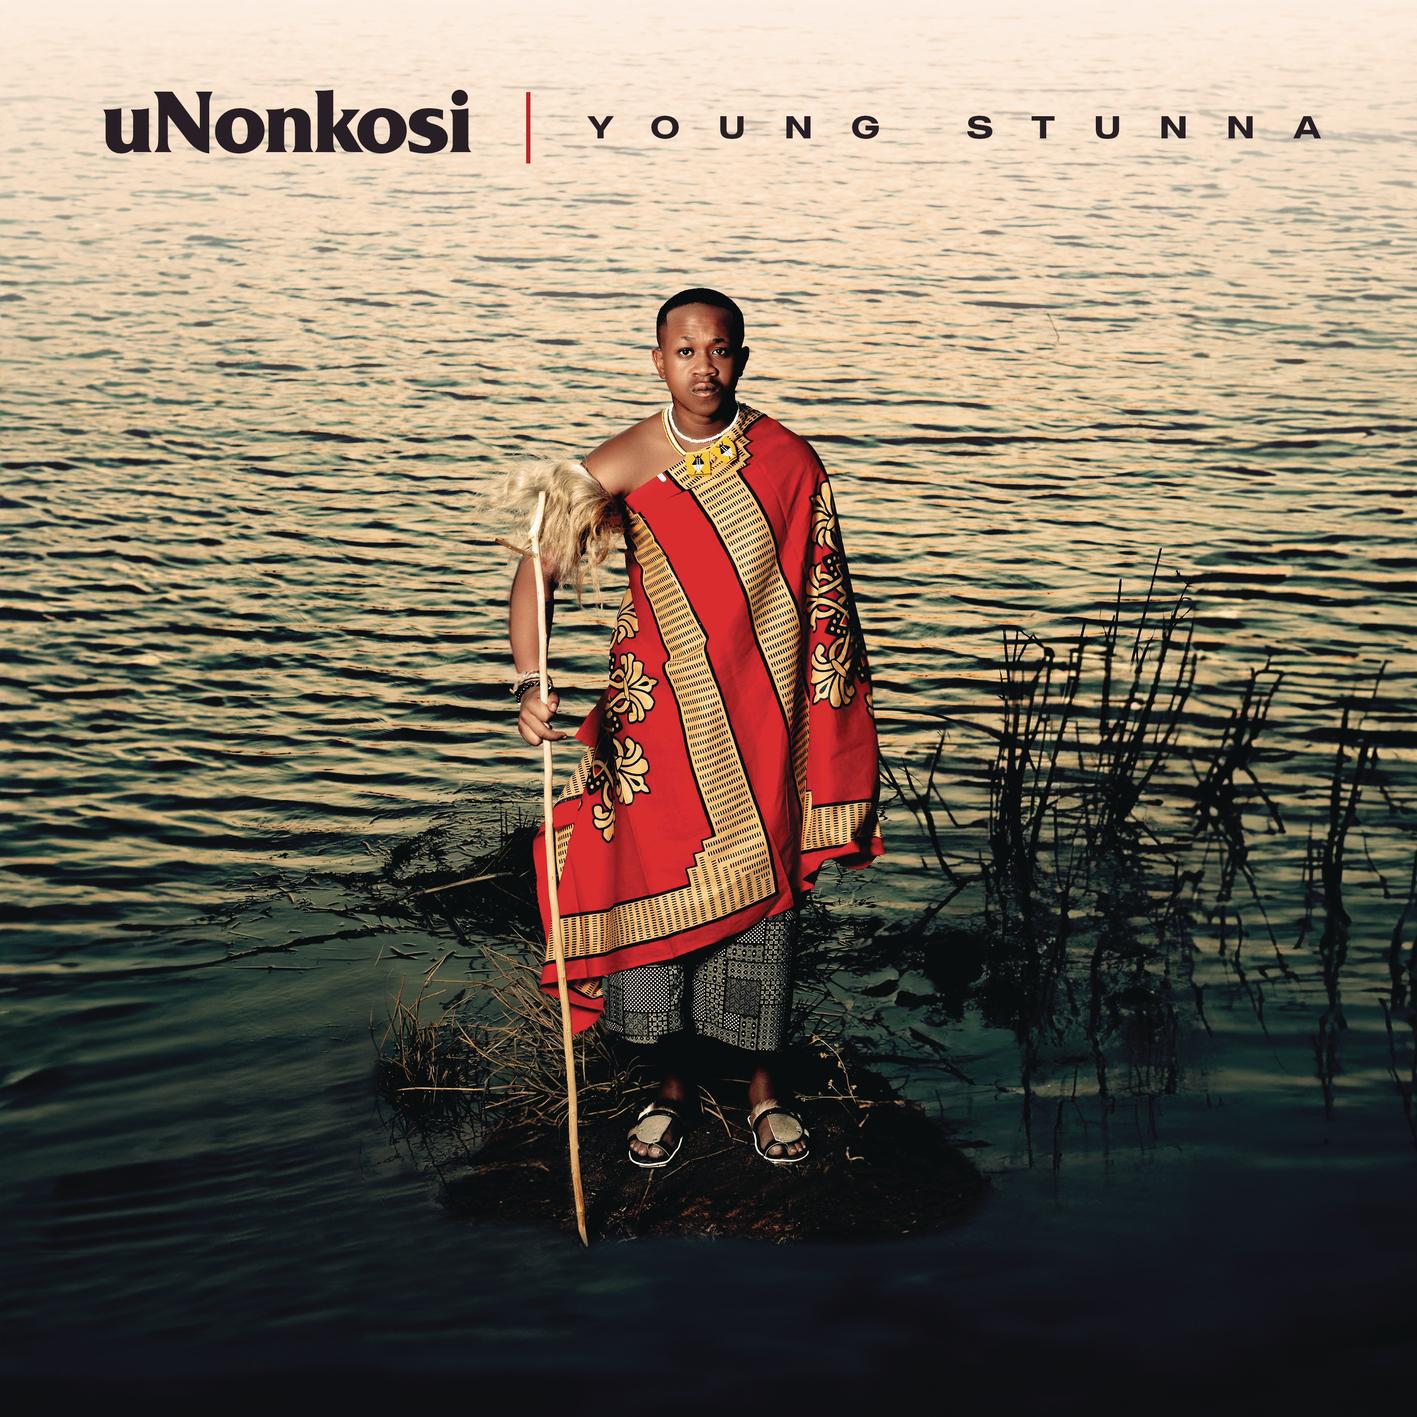 Young Stunna - uNonkosi